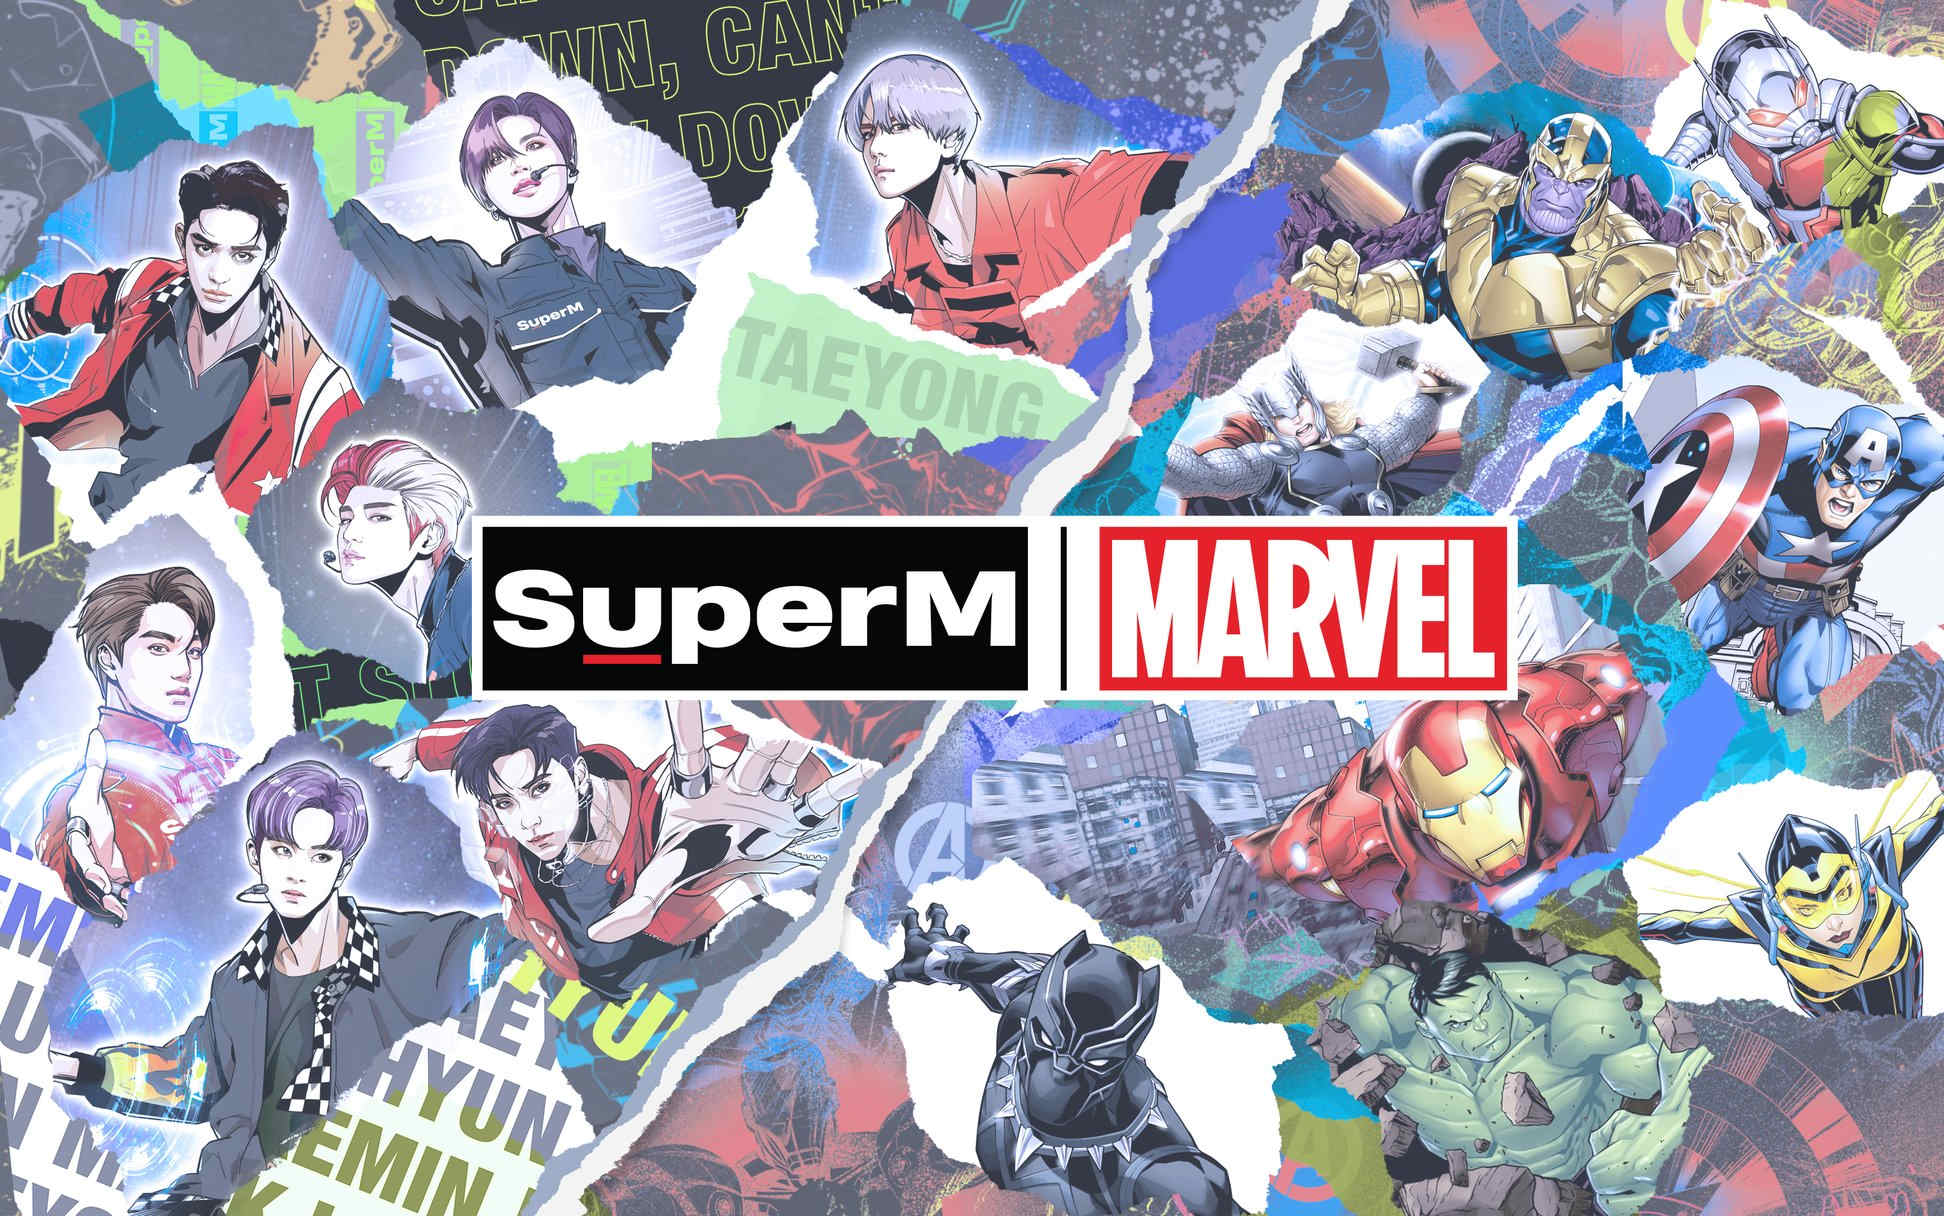 SuperM x Marvel - Collaboration art